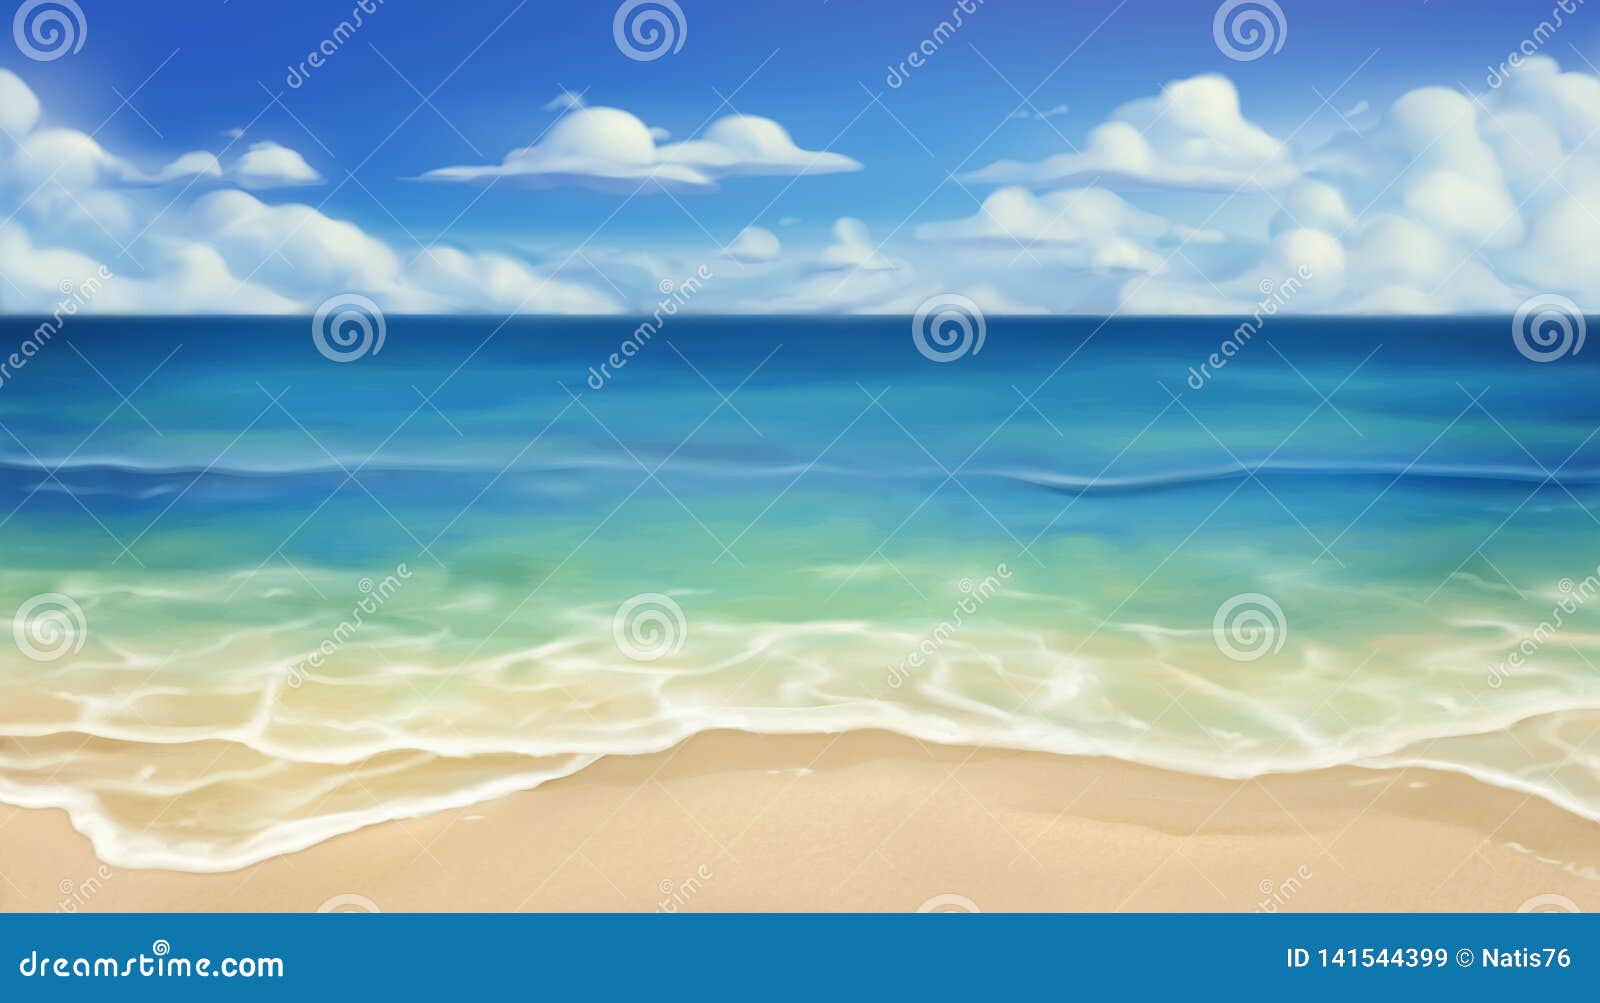 Free Download Beach Sand Wallpaper - PixelsTalk.Net